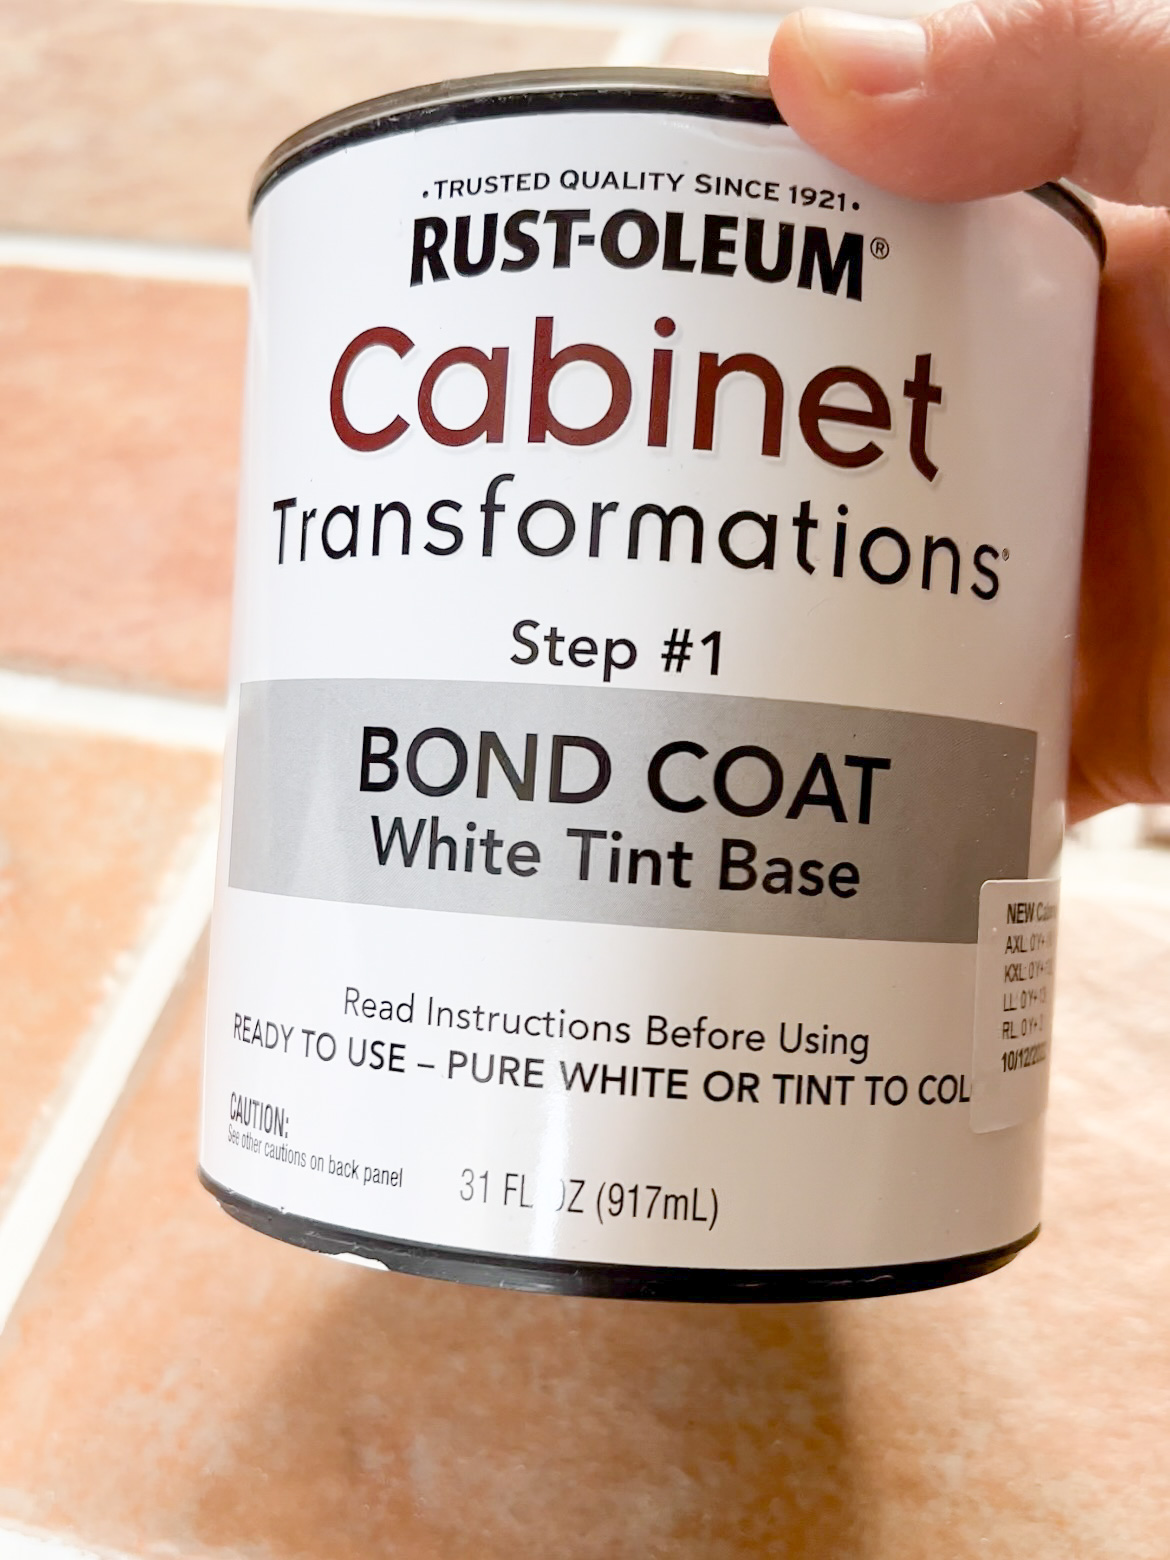 Bond Coat Paint from Rustoleum's Cabinet Transformations Kit.